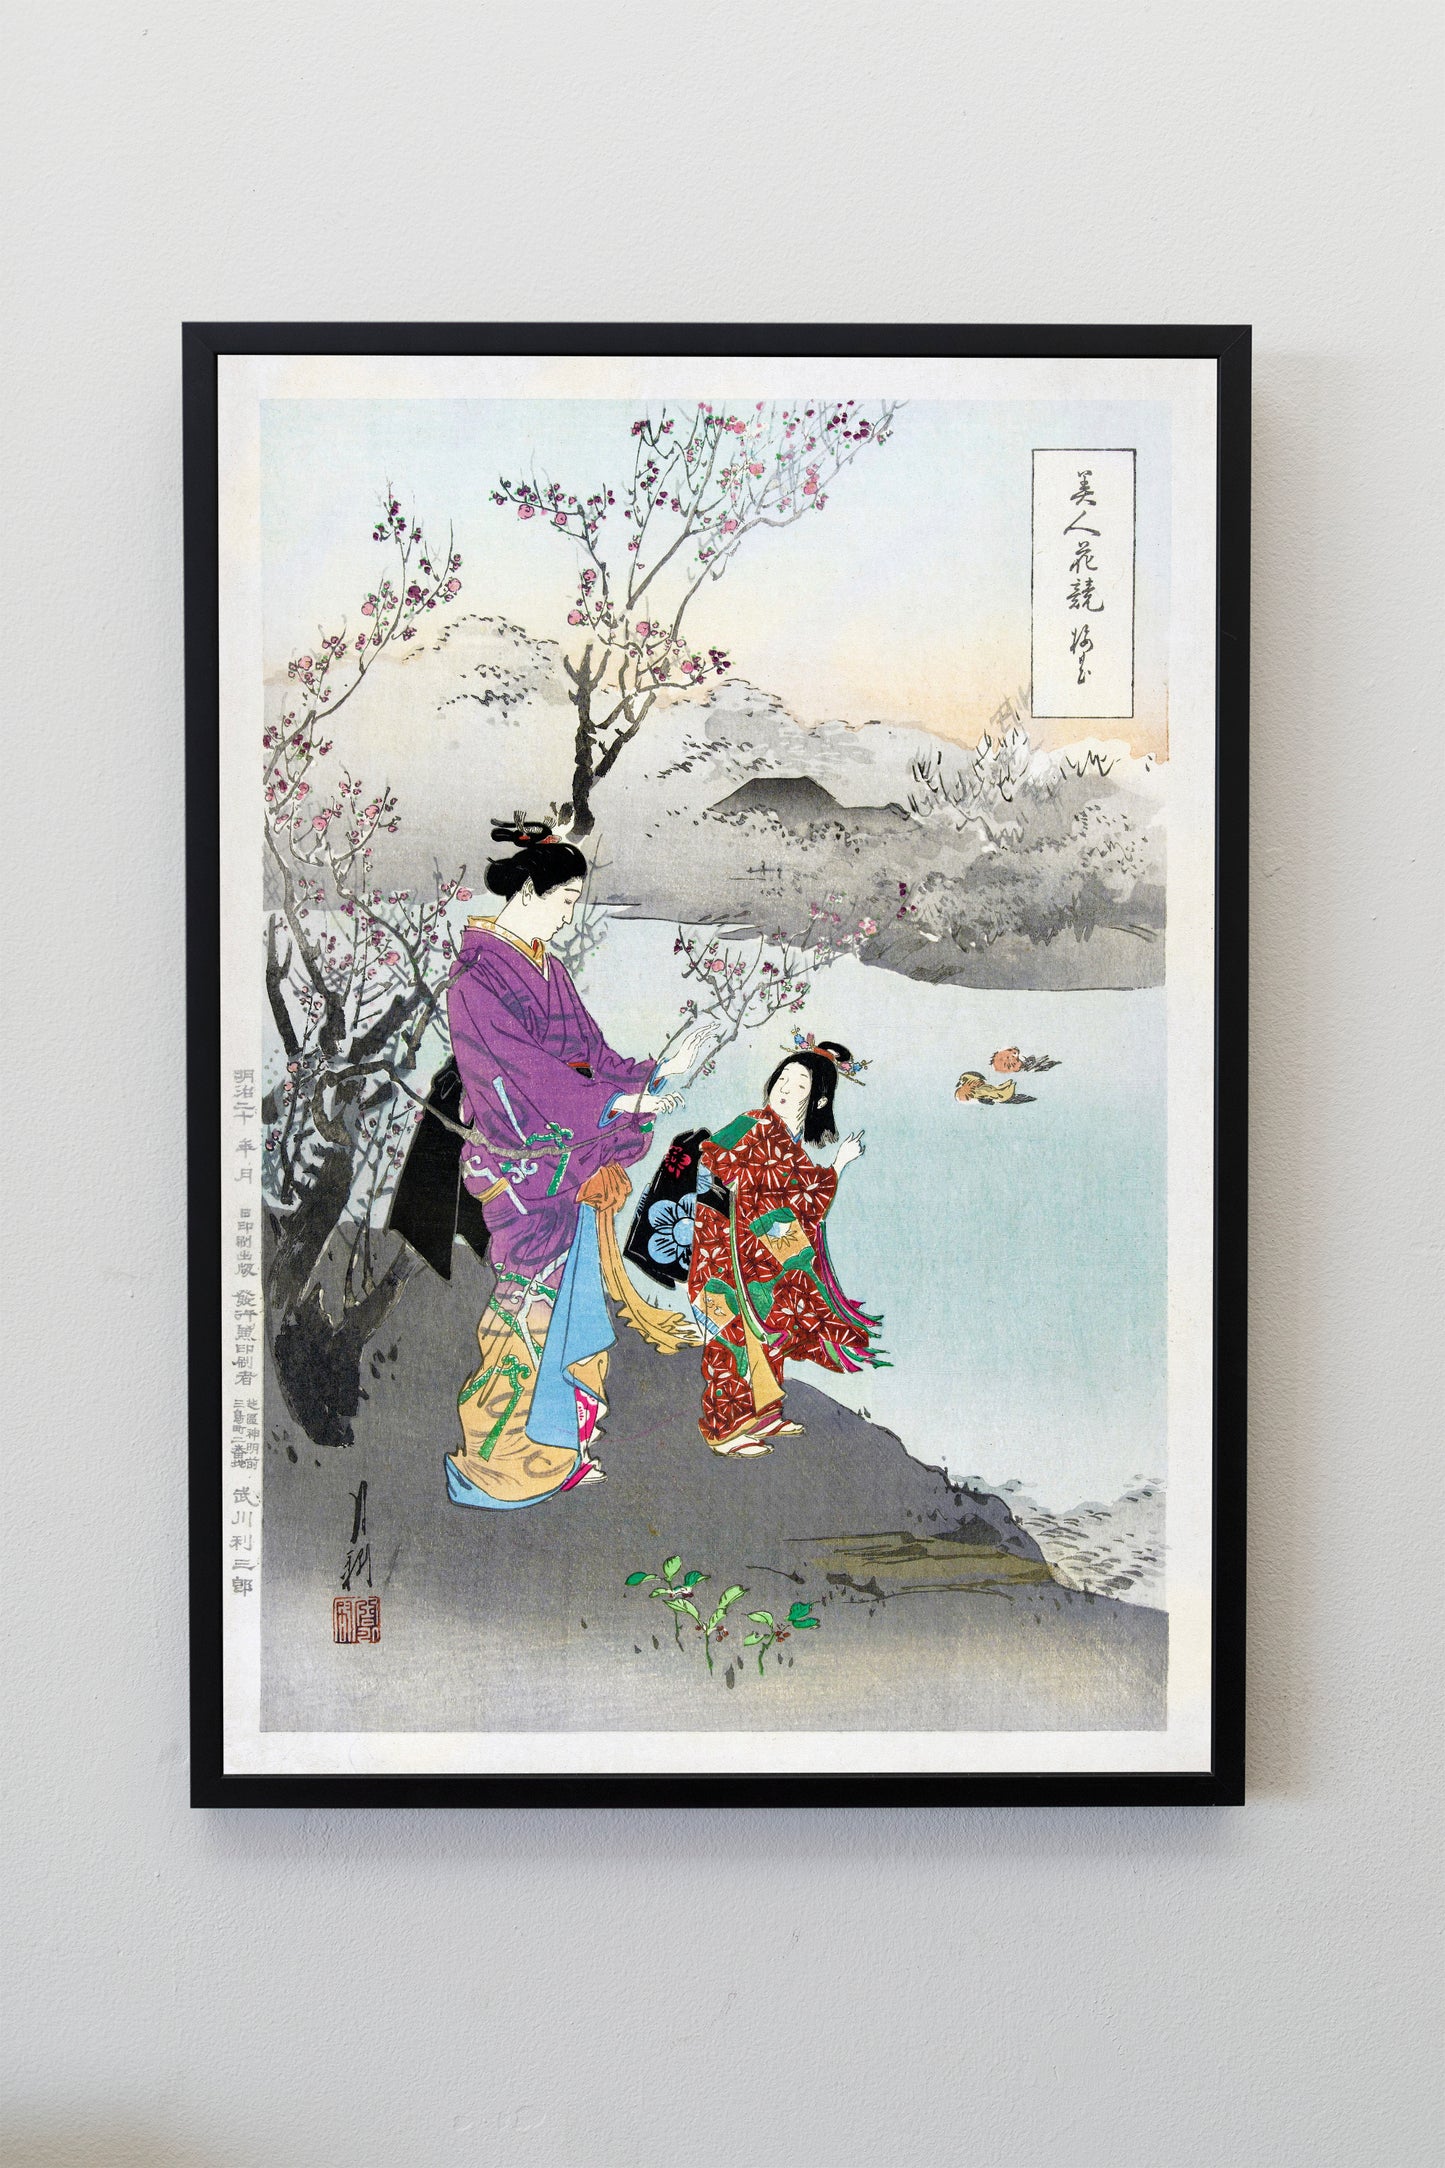 Admiring the Plum Blossom by Ogata Gekko Japanese Art Print Poster Wall Hanging Decor A4 A3 A2